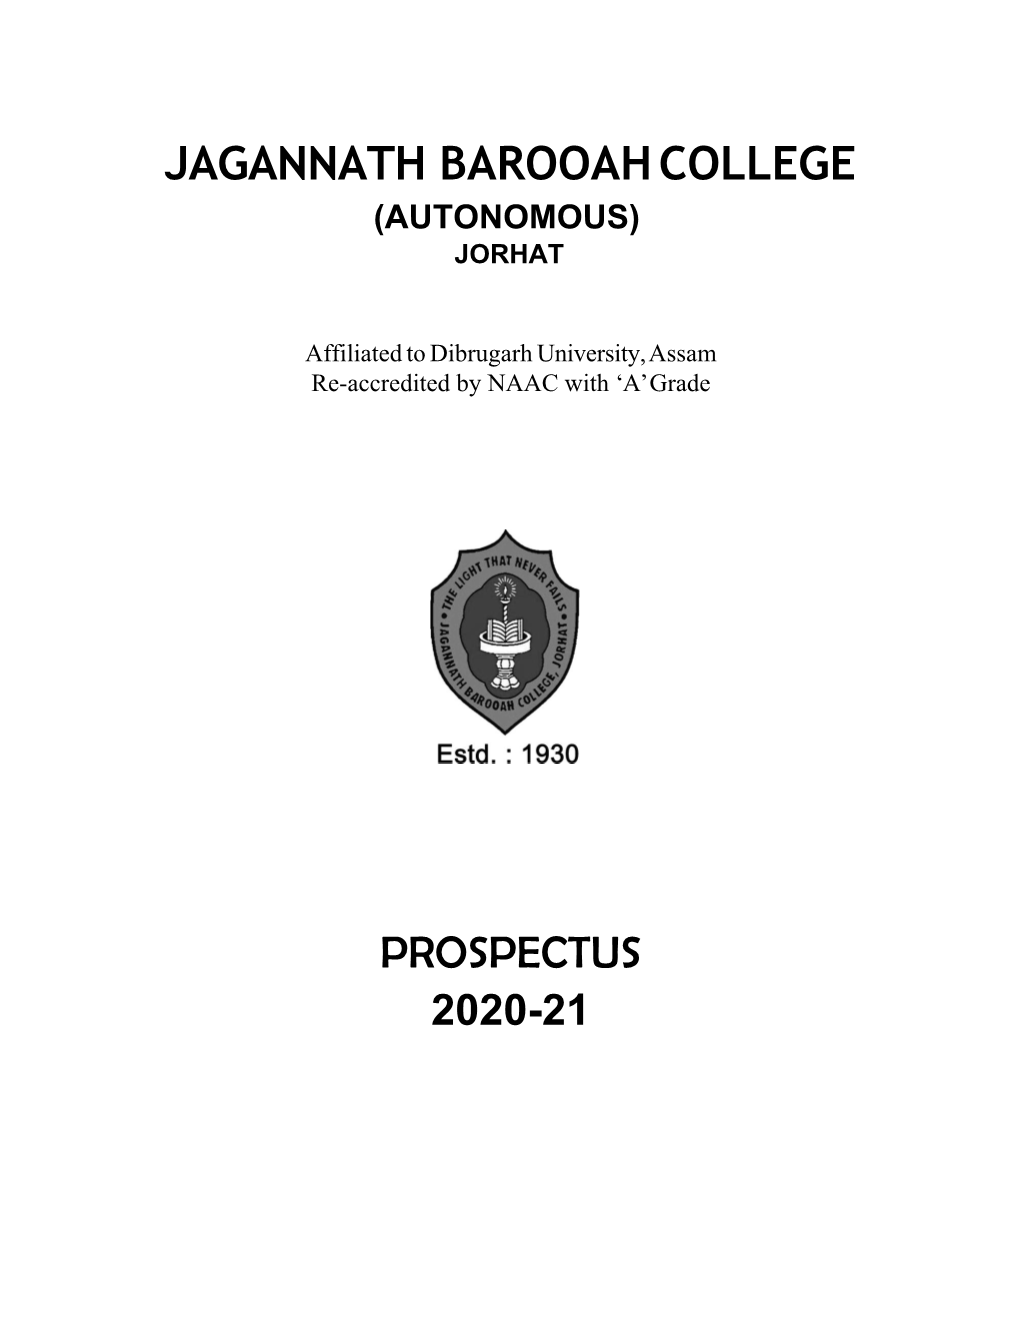 Jagannath Barooah College (Autonomous) Jorhat